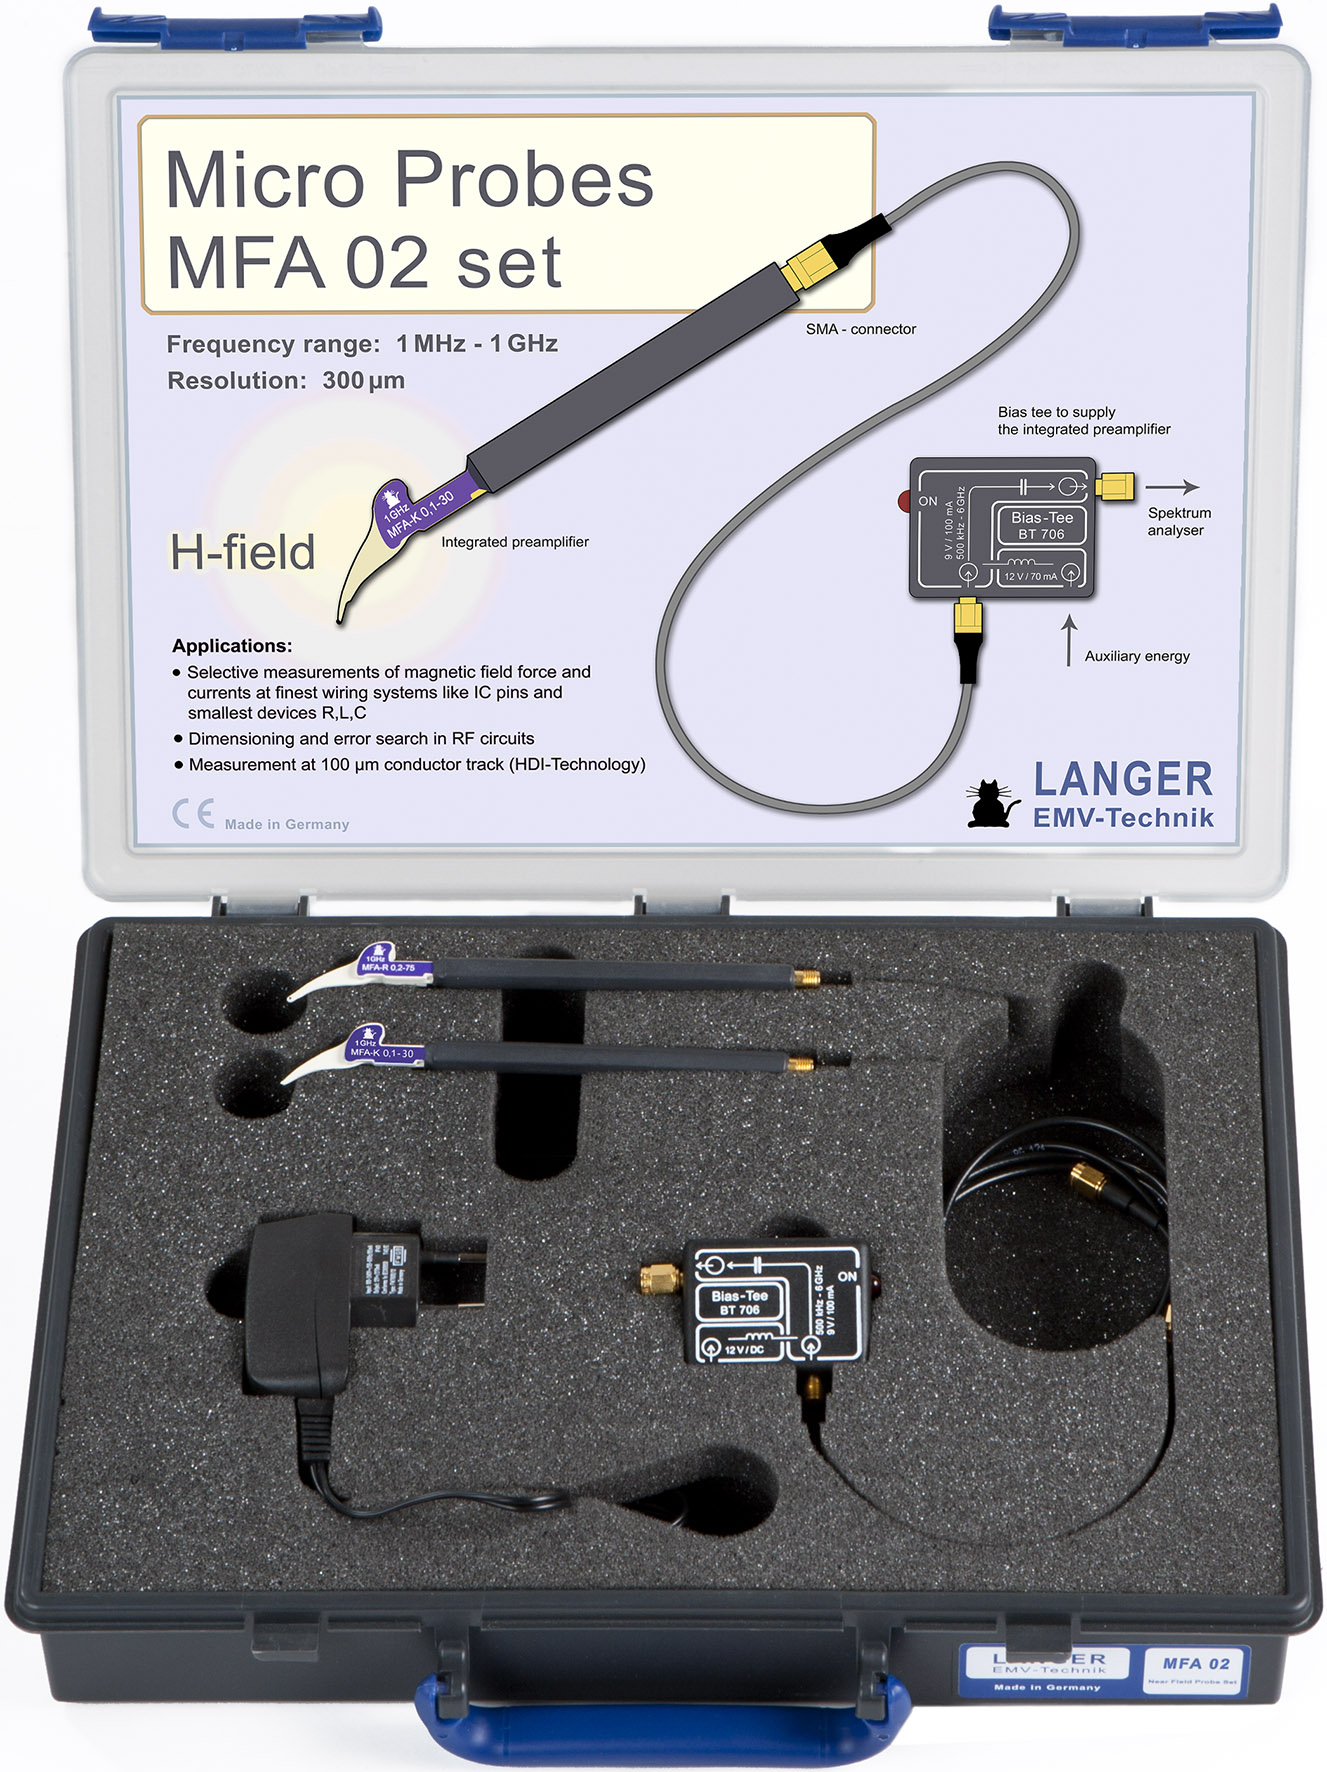 MFA 02 set, Micro Probes 1 MHz up to 1 GHz